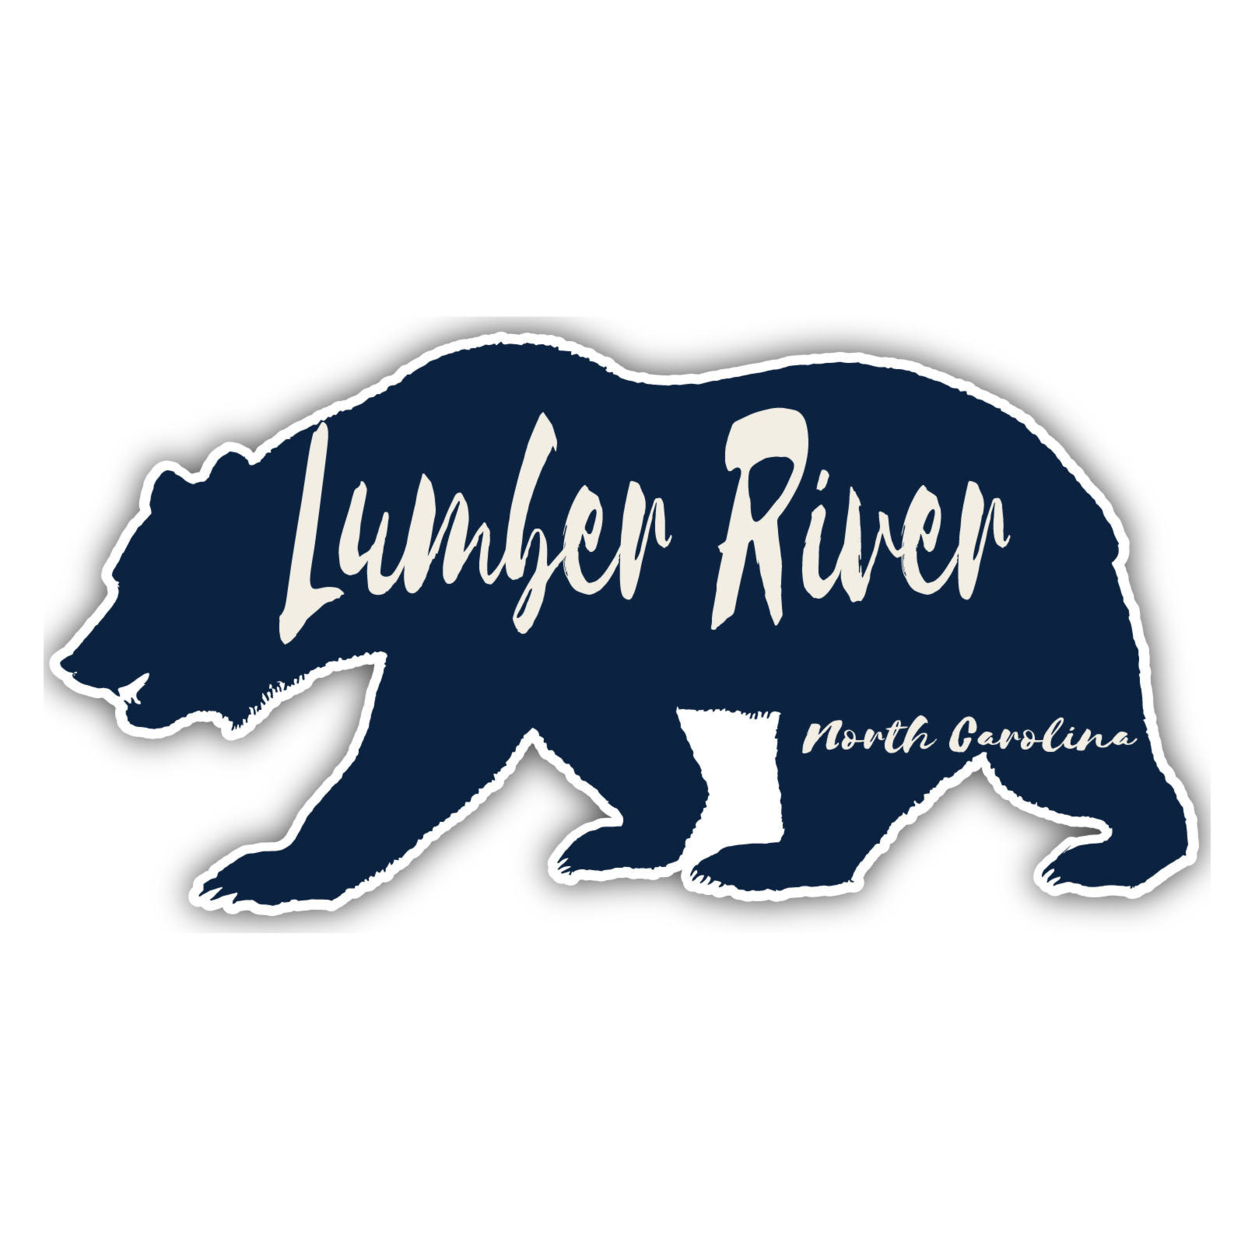 Lumber River North Carolina Souvenir Decorative Stickers (Choose Theme And Size) - 4-Inch, Bear